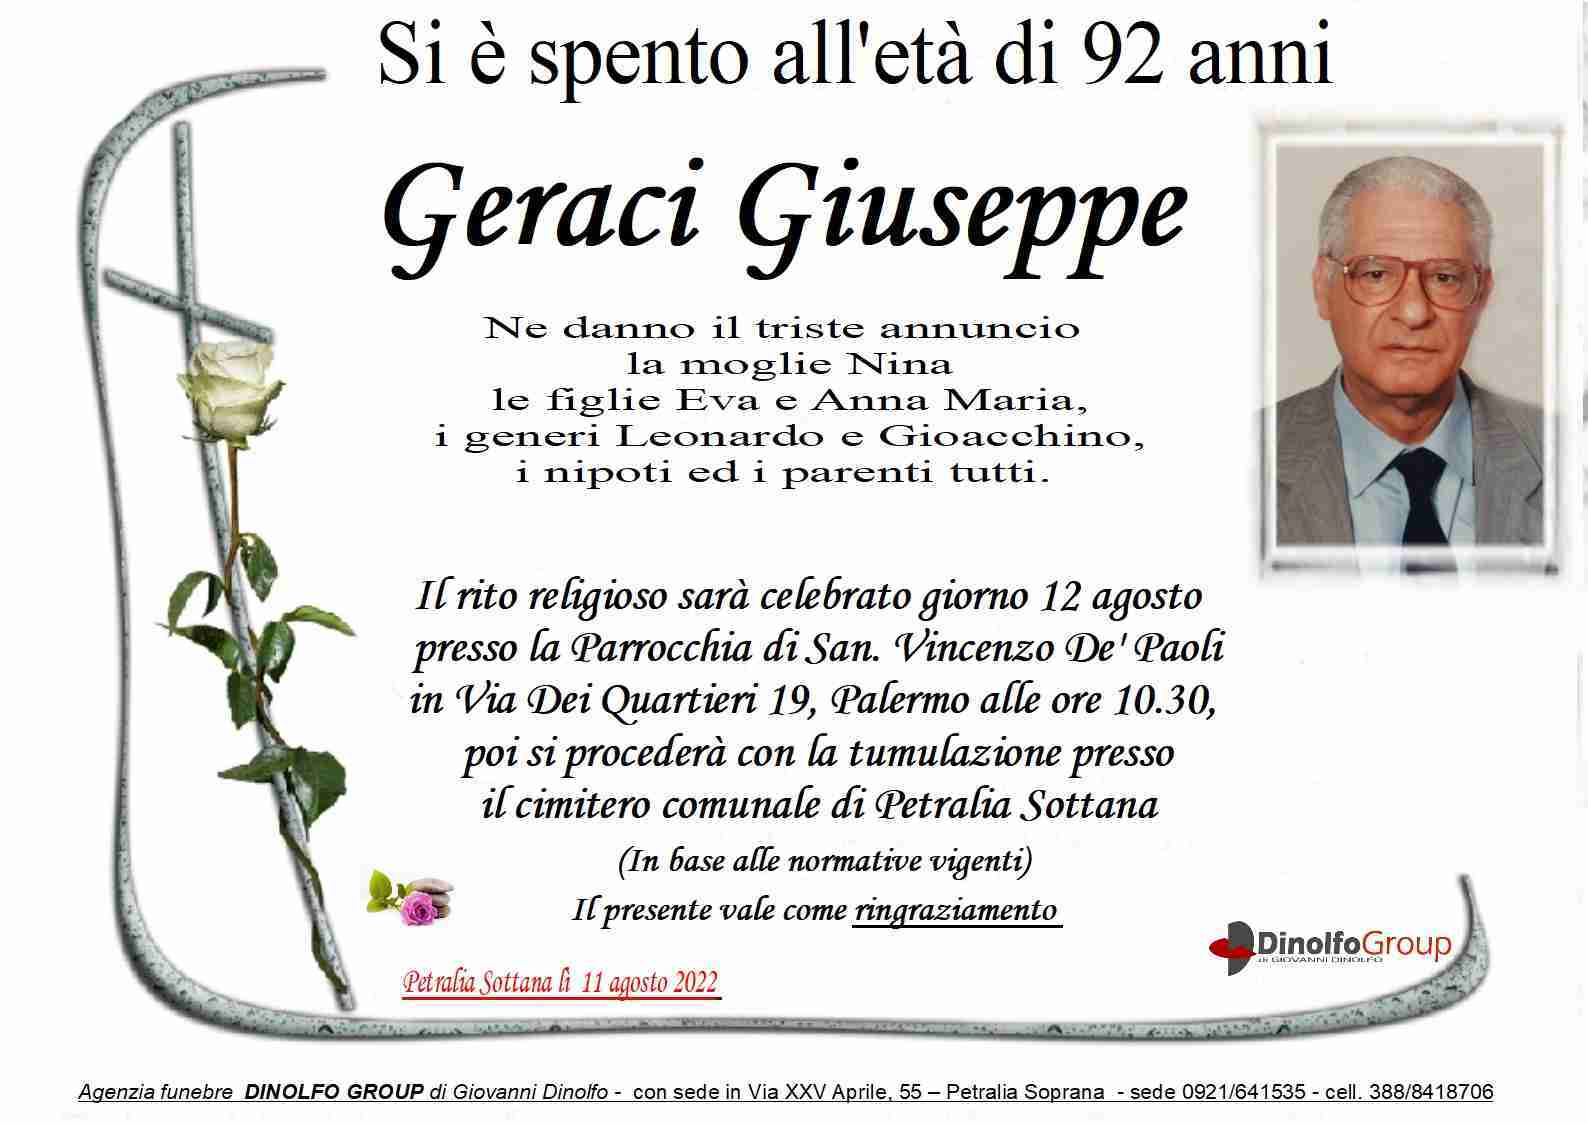 Giuseppe Geraci